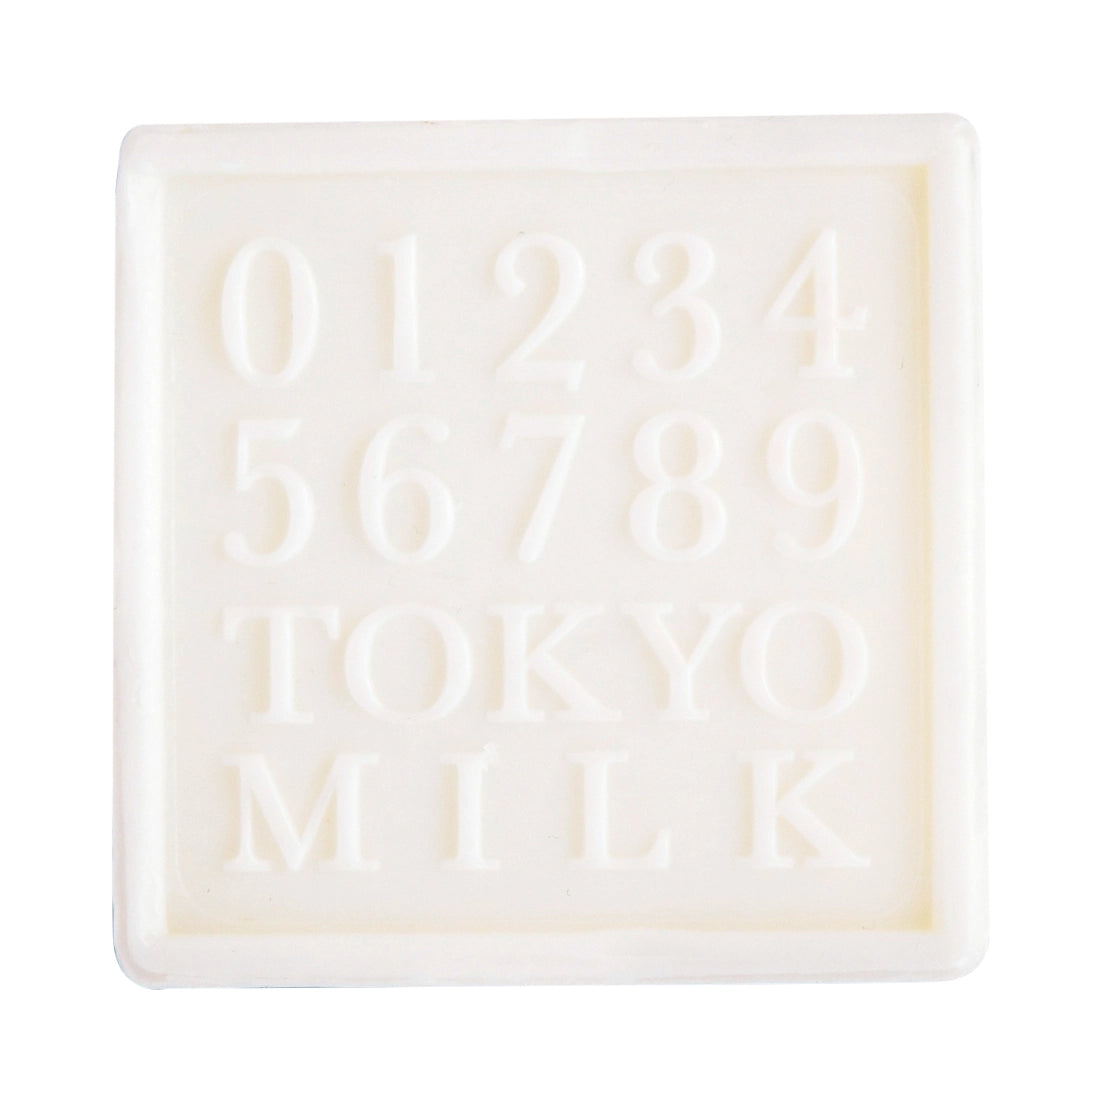 Tokyomilk "Just Because" Finest Perfumed Soap – Green Tea Fragrance - 4oz